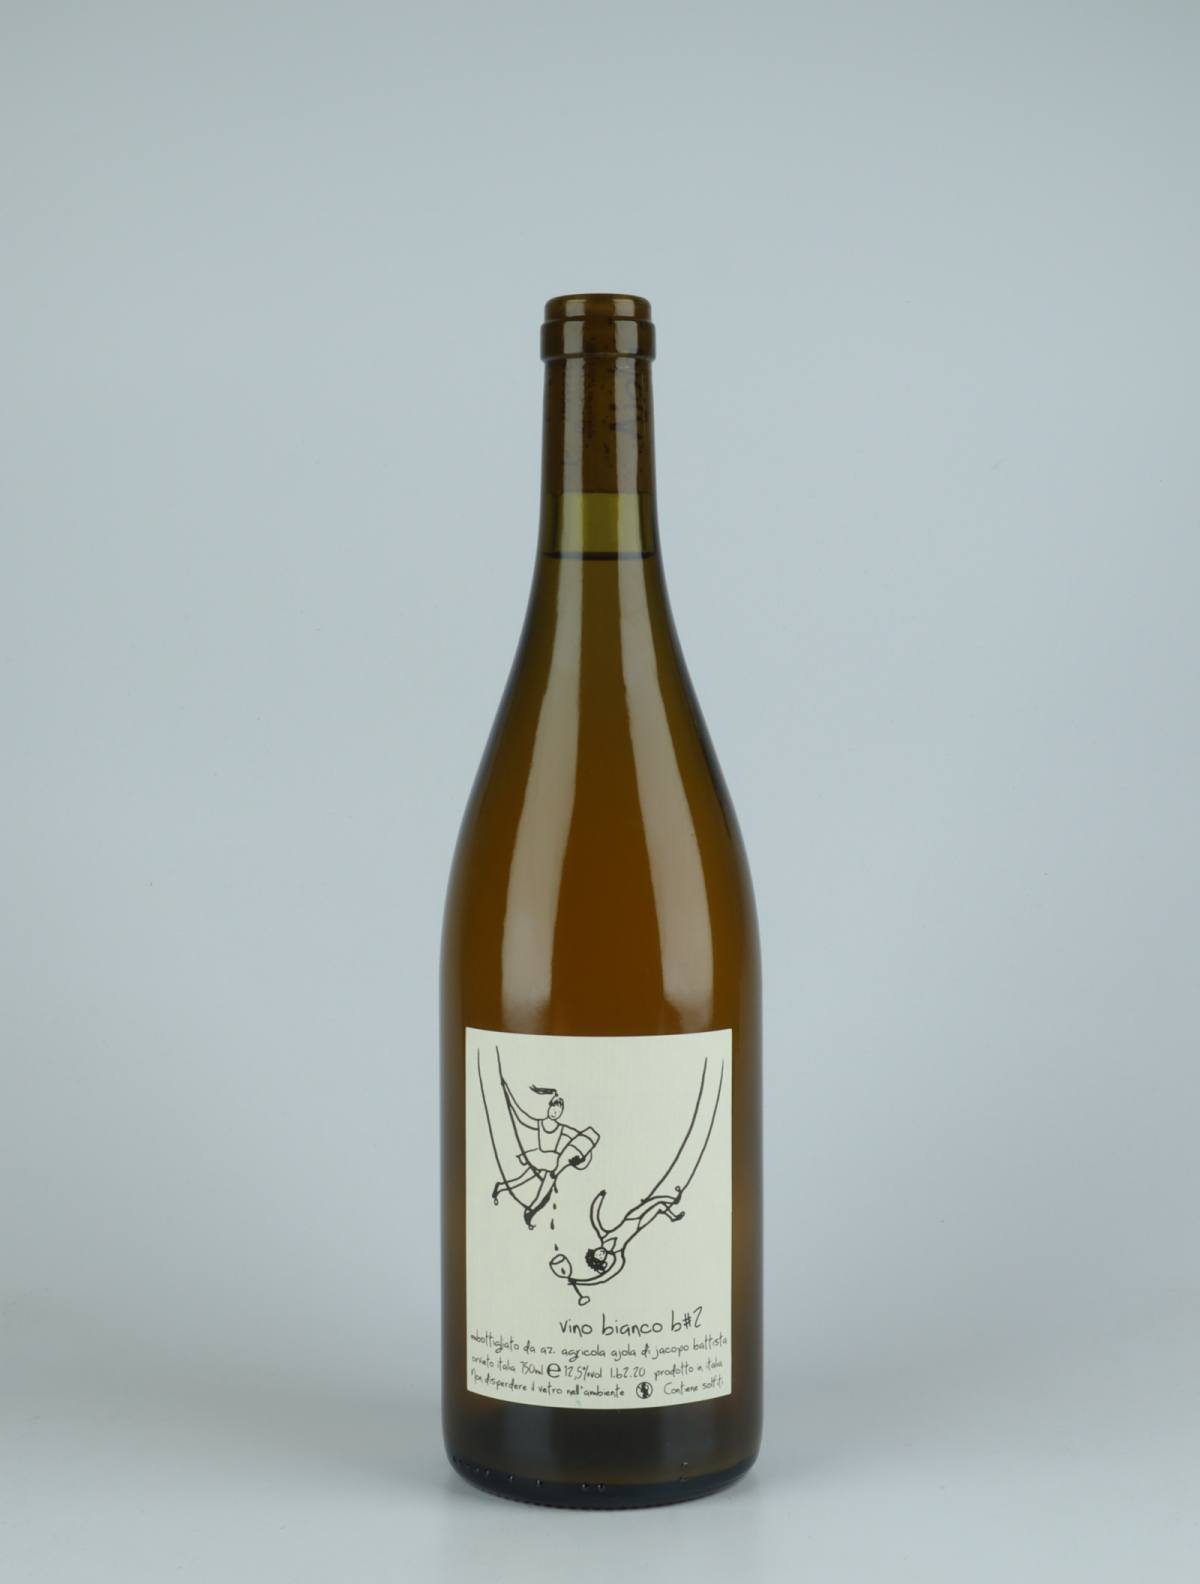 En flaske 2020 Vino Bianco #2 Orange vin fra Ajola, Umbrien i Italien